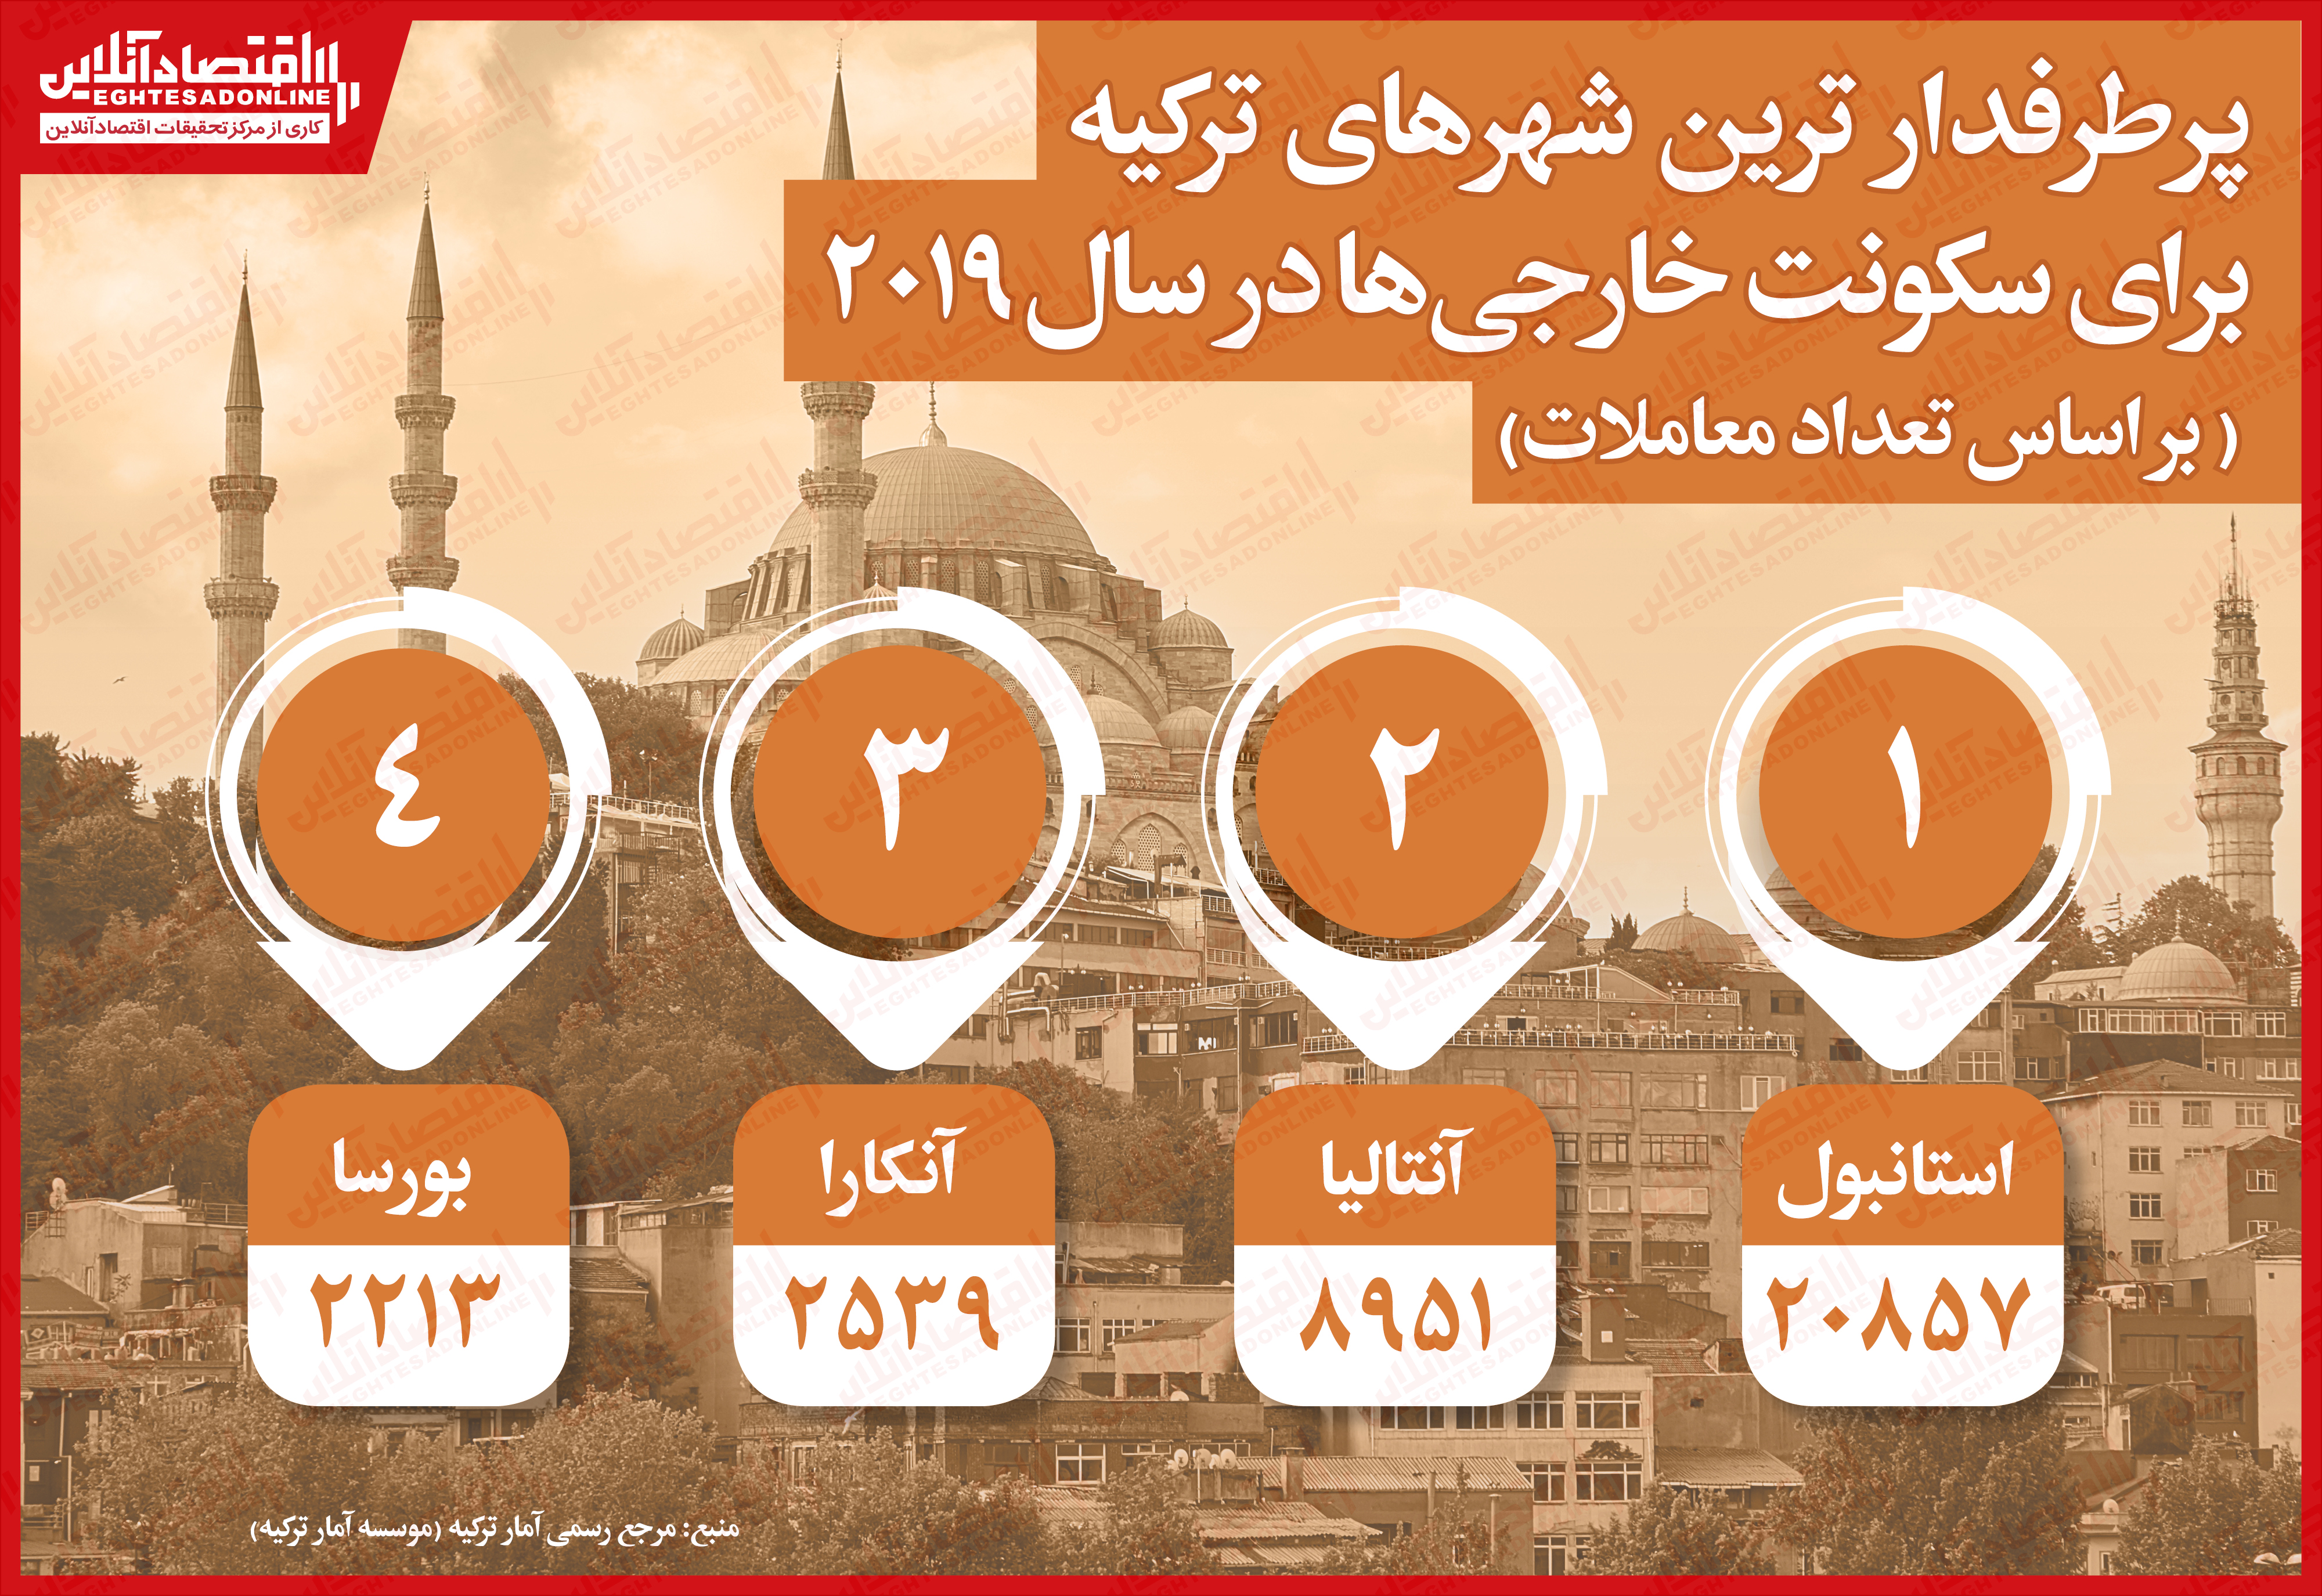 eghtesadonline-info shahrhaye portarfdar turkey 99-3-12-- (1)